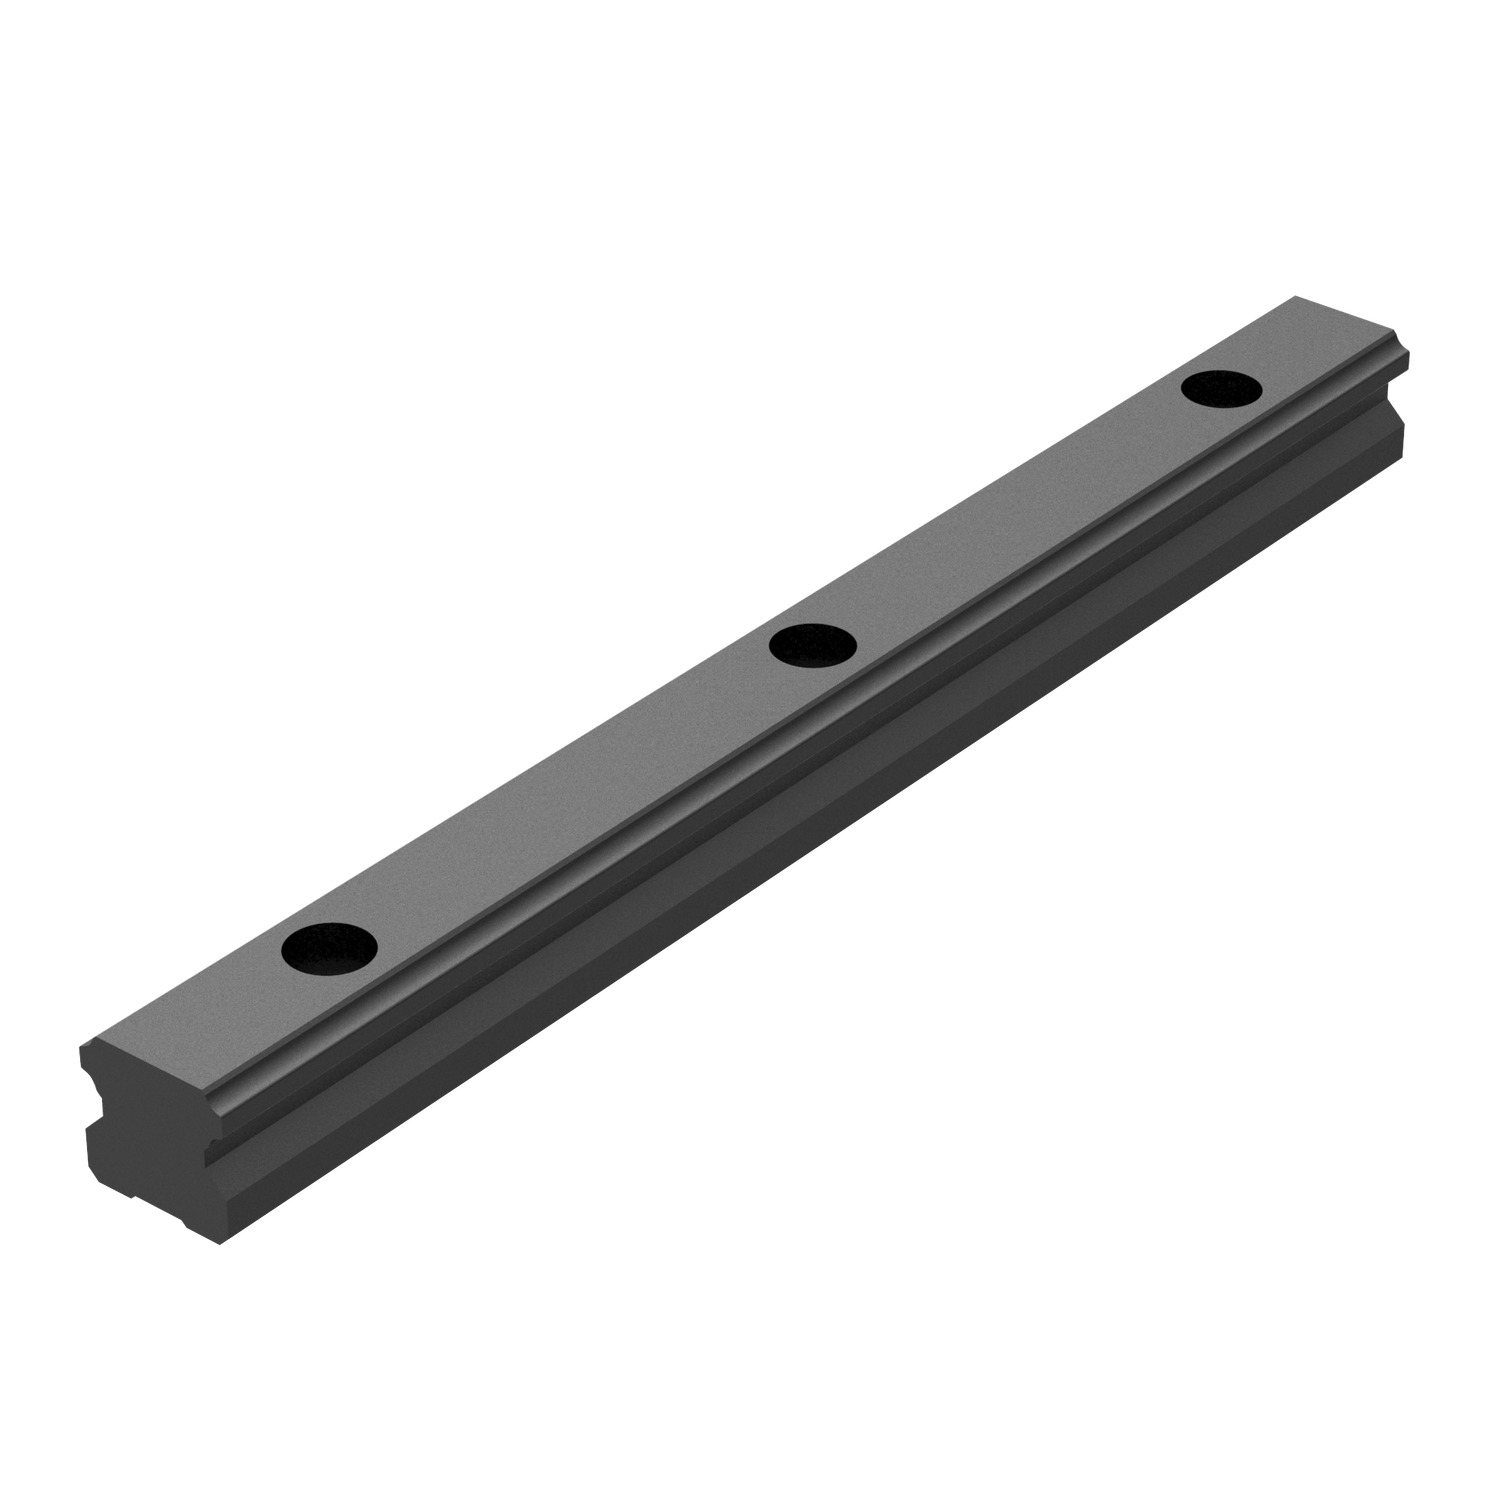 L1016.BL25-0640 Black Linear guide rail 25mm 640 Black Oxide